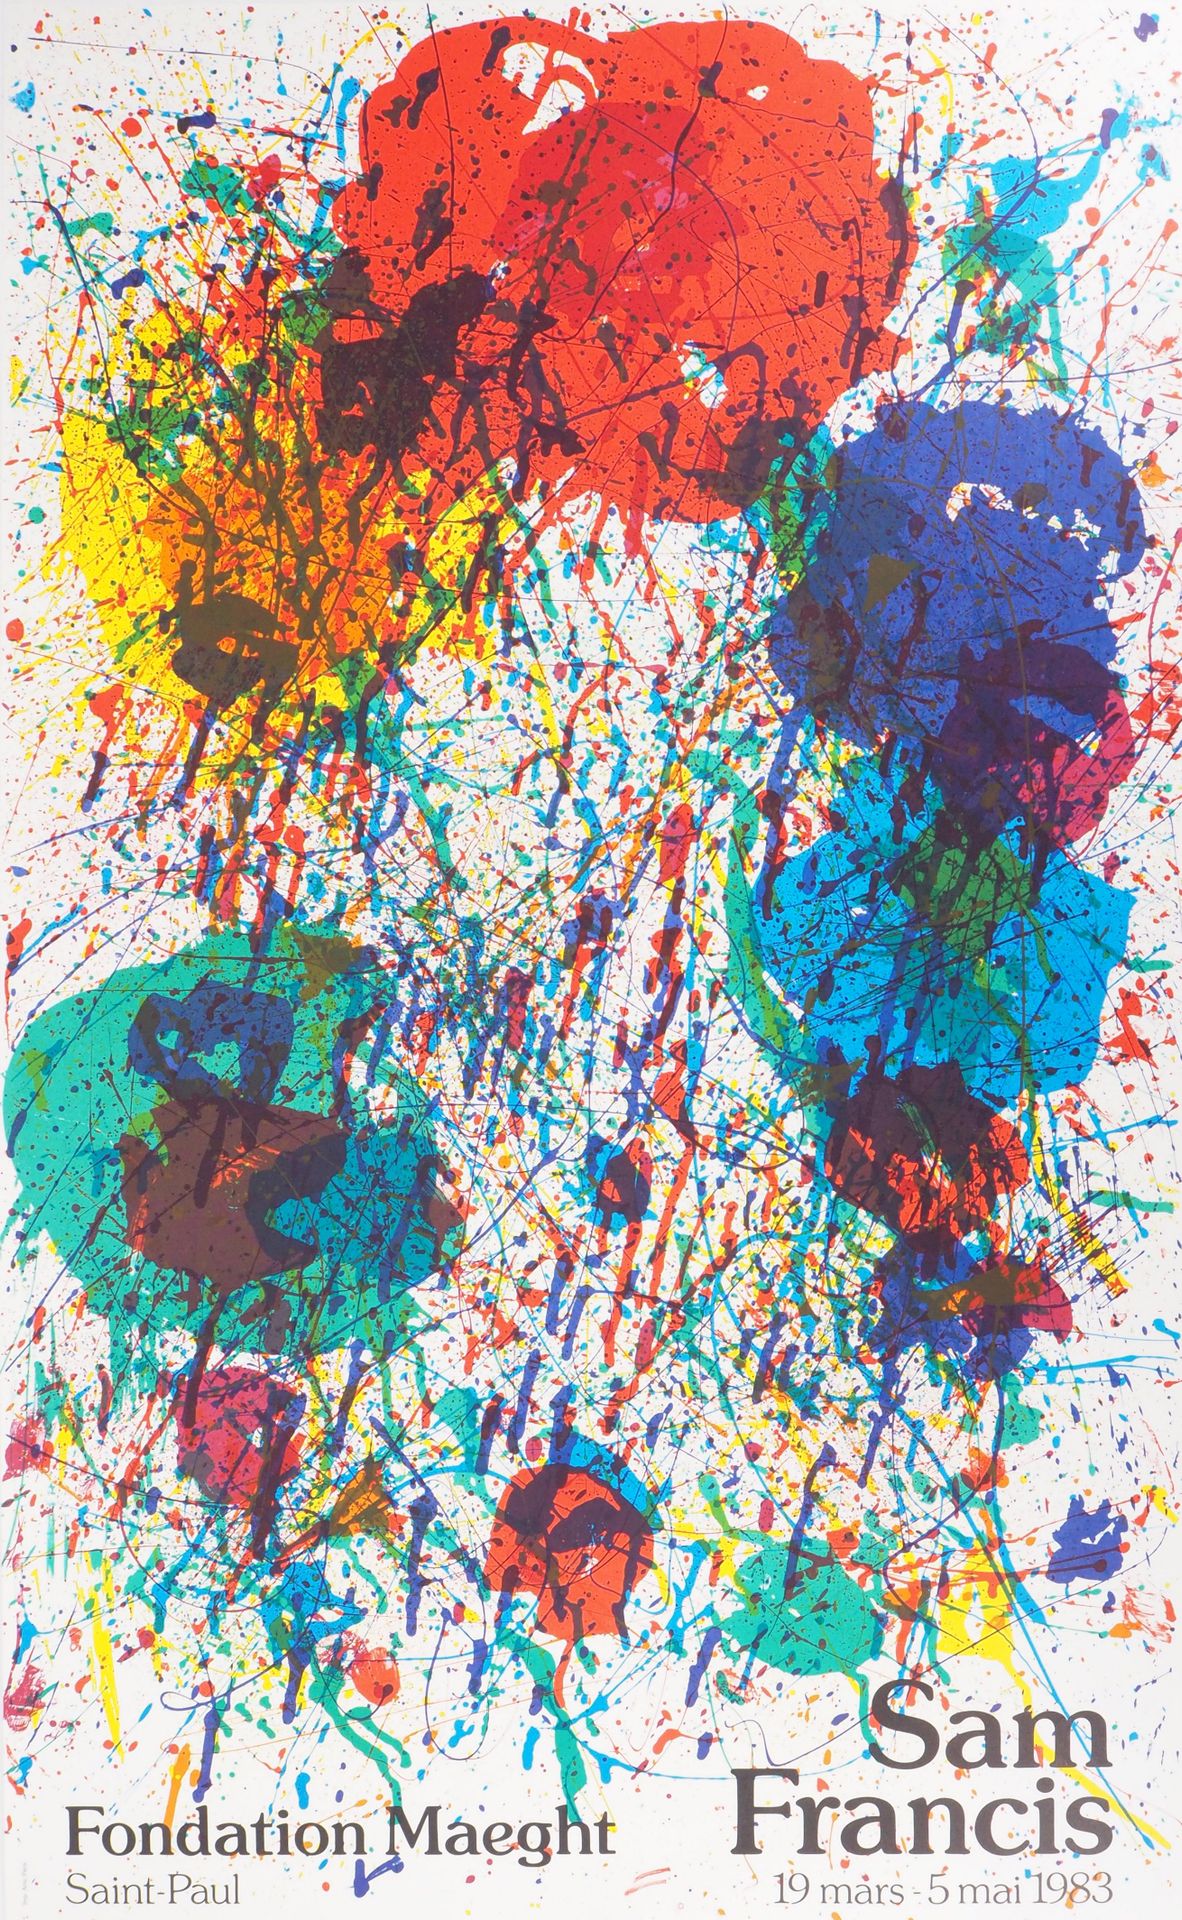 Sam FRANCIS 萨姆-弗兰西斯

爆炸性的色彩

这一时期的原版石印海报

为1983年在迈格特基金会举办的山姆-弗朗西斯展览而制作

印刷商：Arte&hellip;